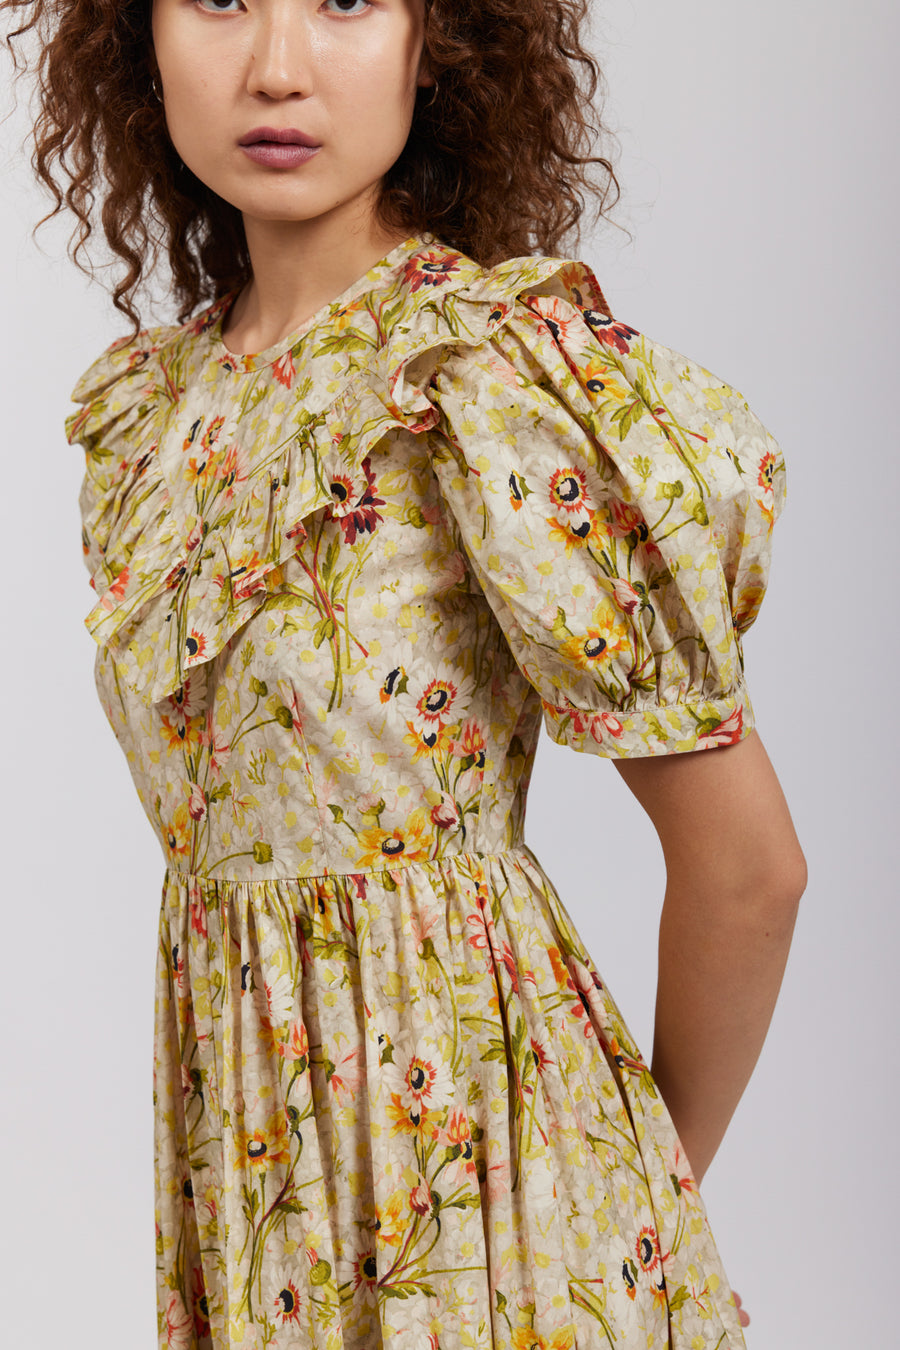 BATSHEVA - Laura Ashley x Batsheva May Dress in Witton Floral